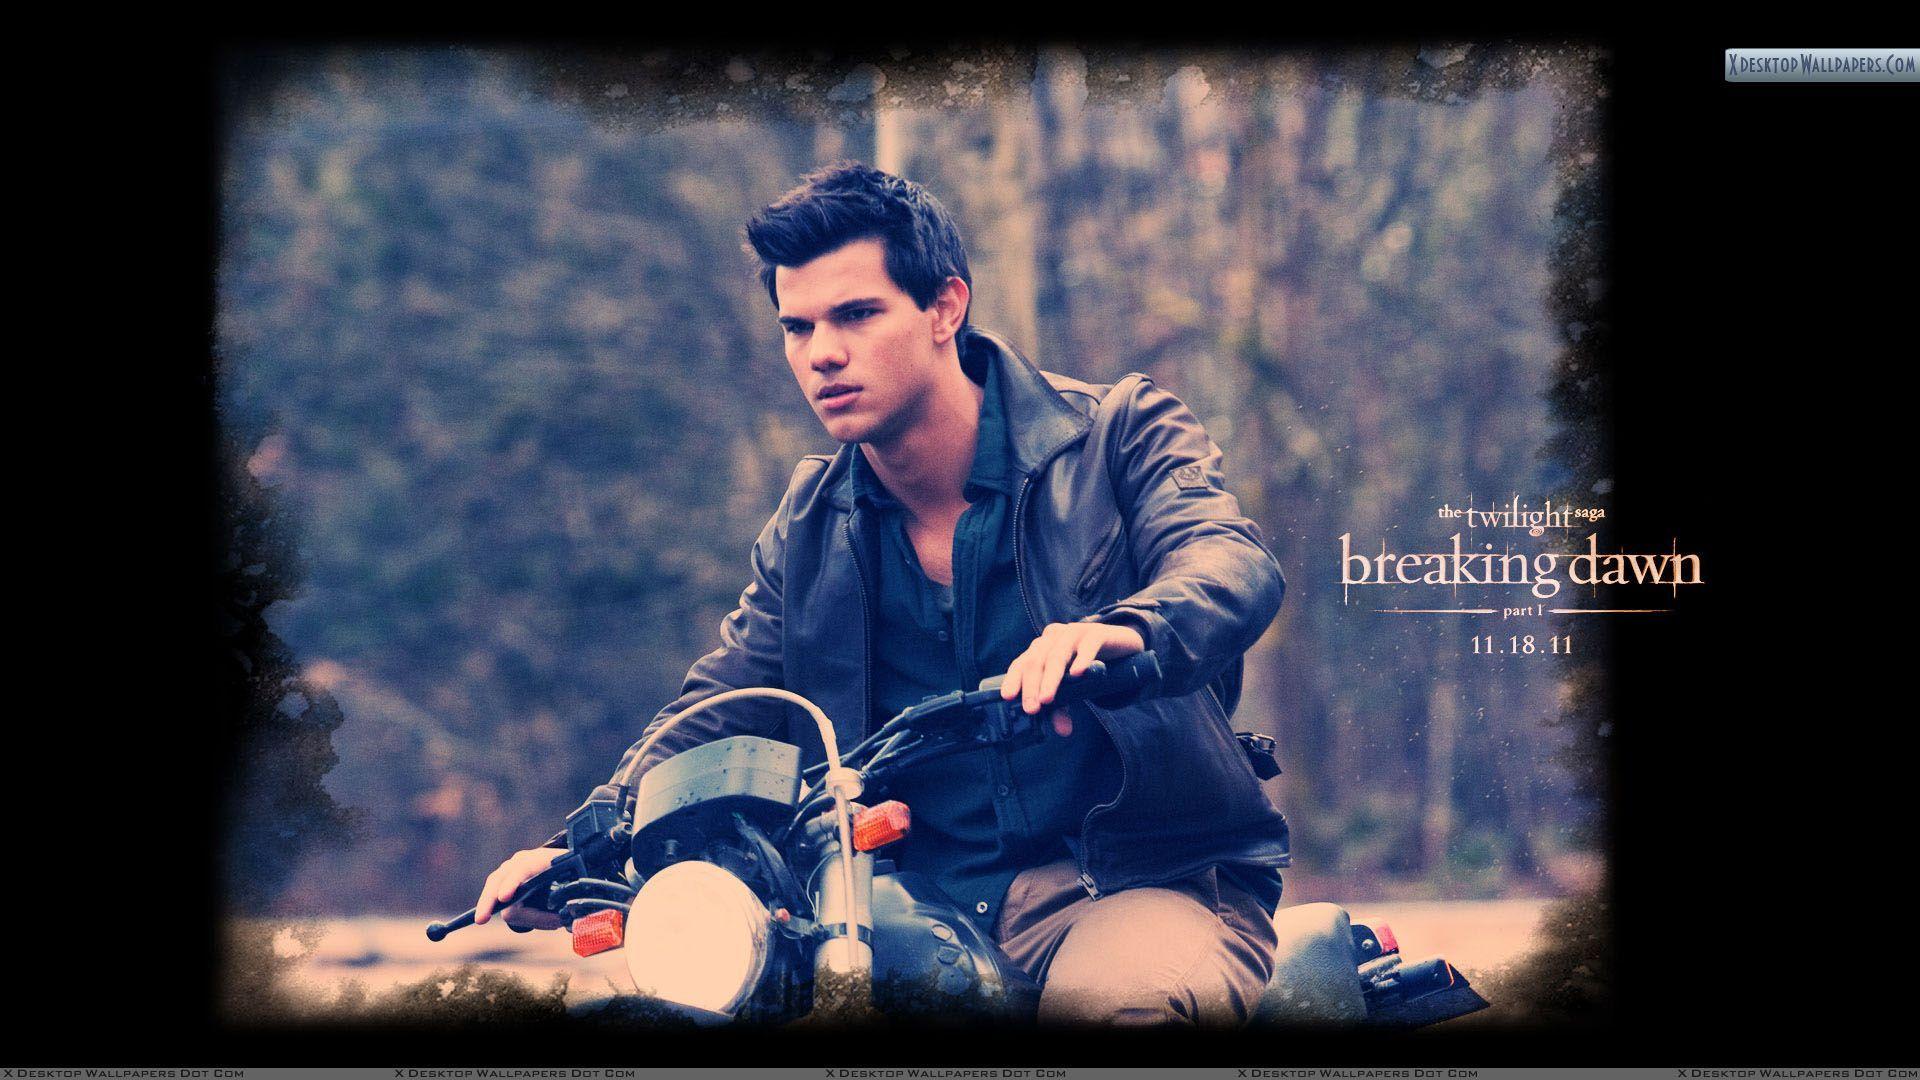 Taylor Lautner Wallpaper, Photo & Image in HD